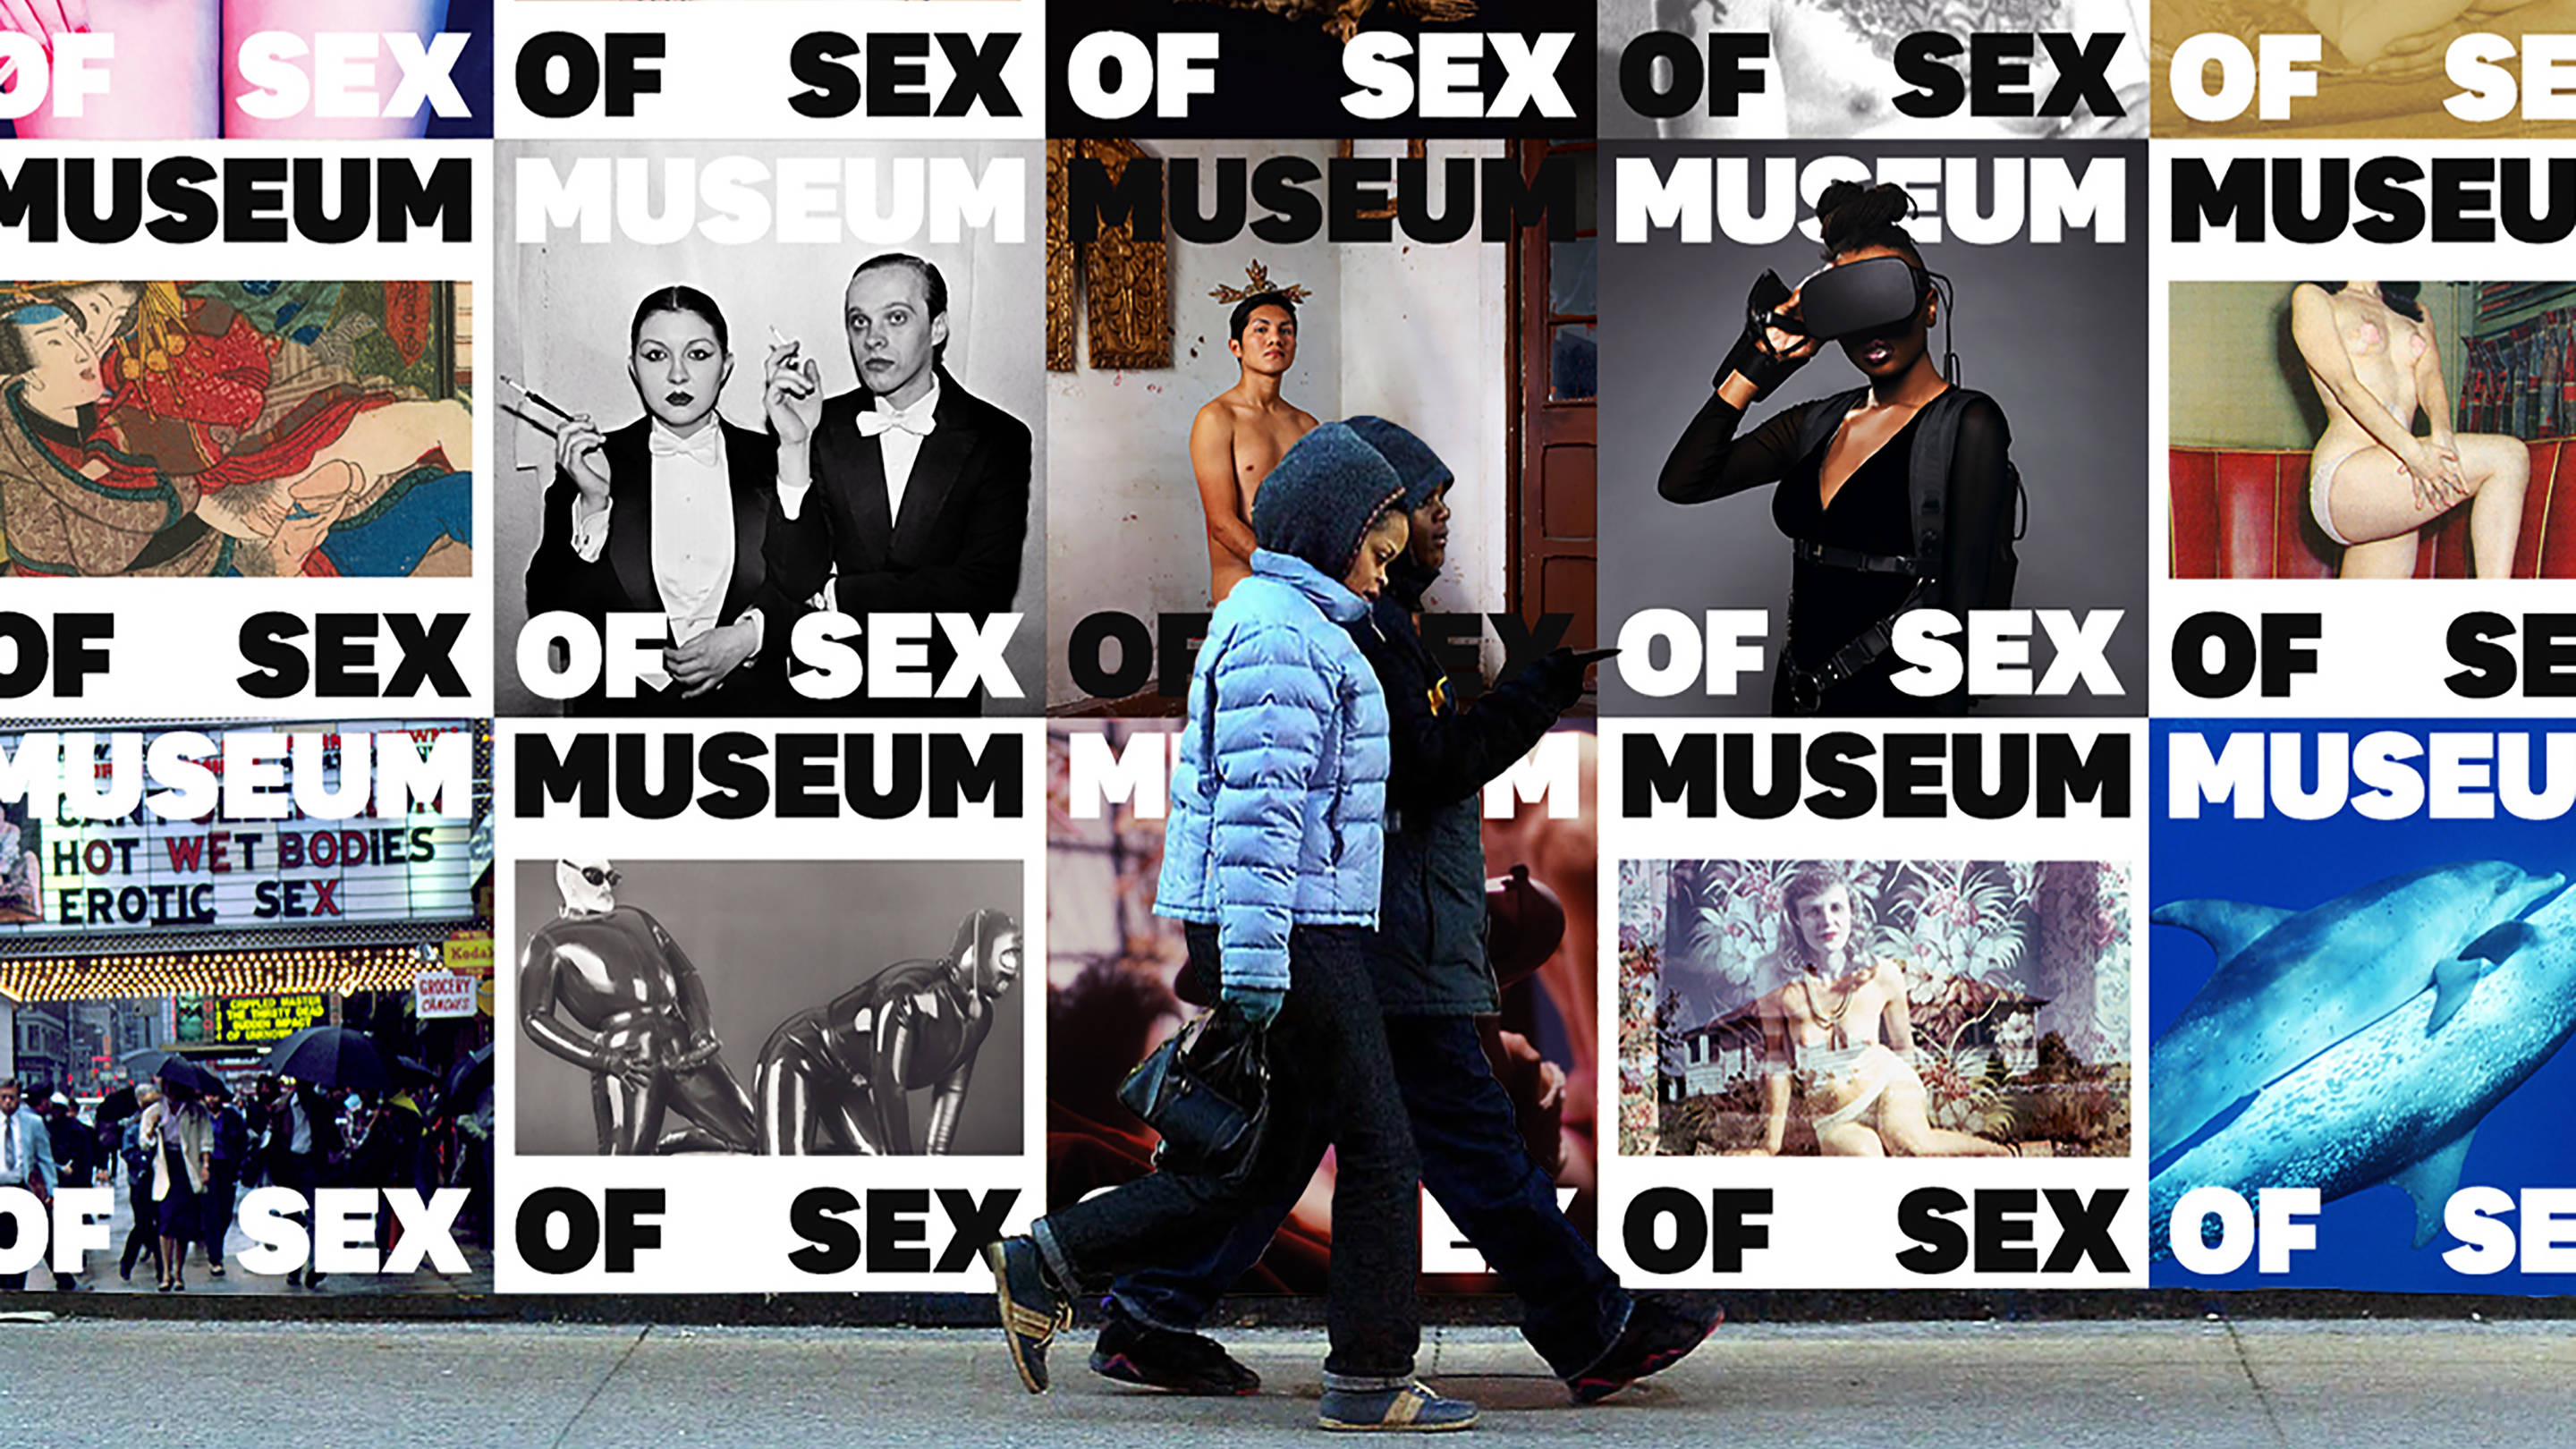 Museum of sex playboy